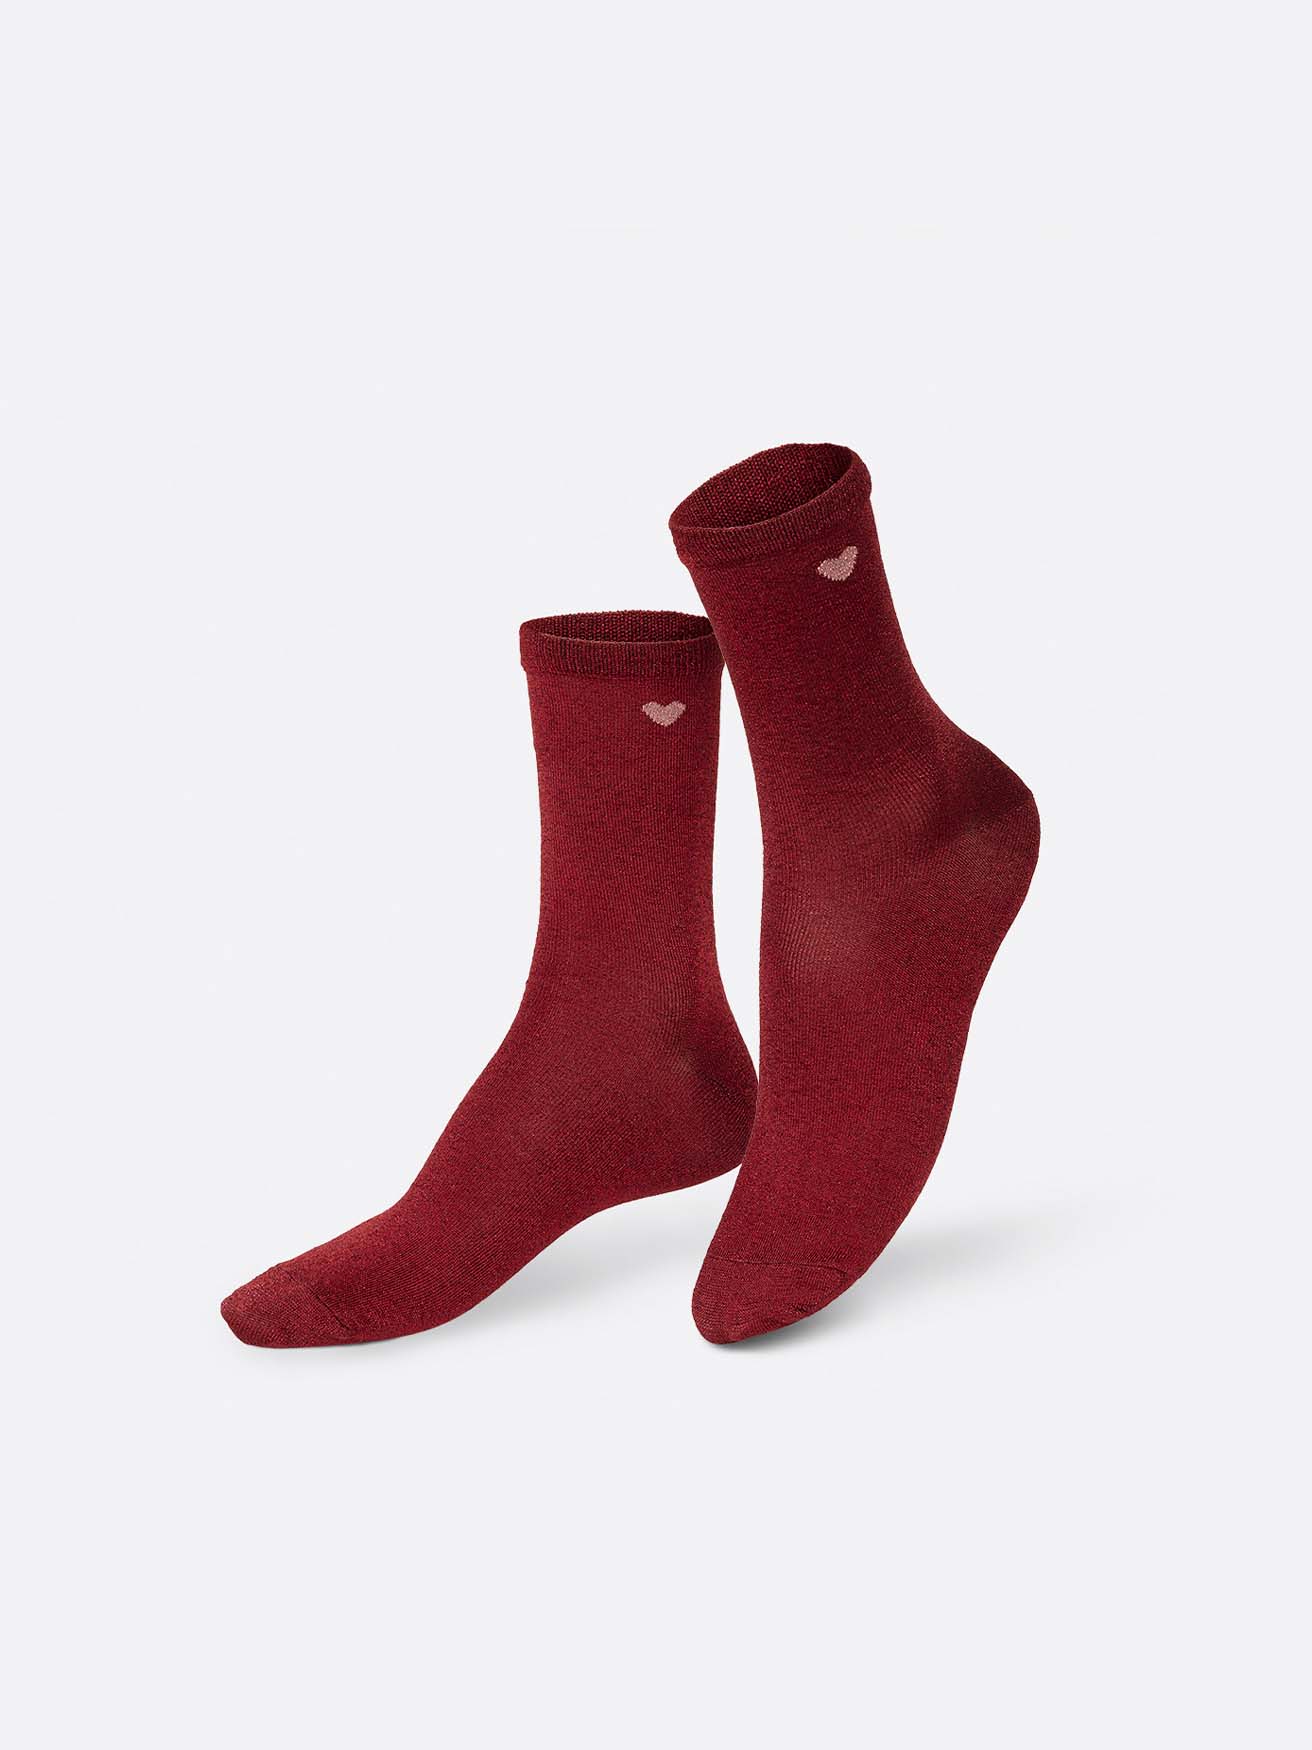 Eat My Socks . Love Me Red